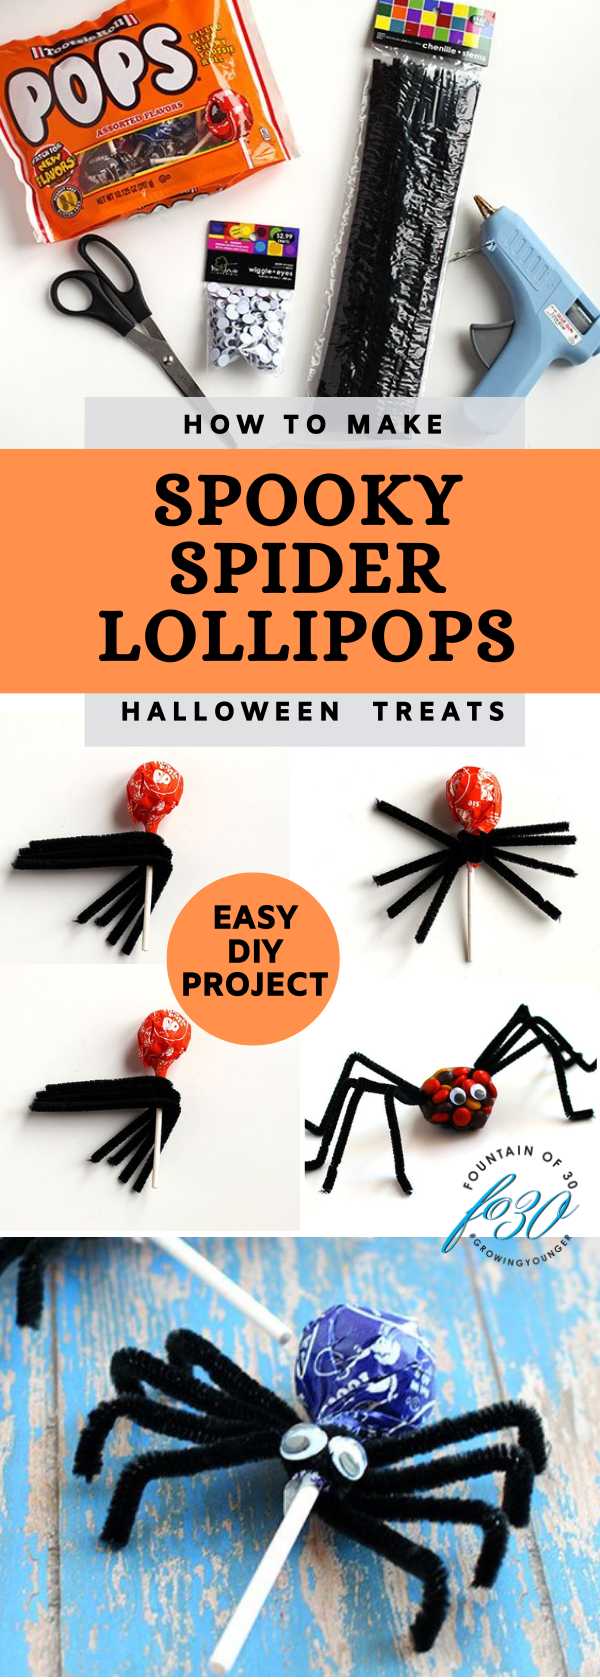 easy diy halloween spider lollipops fountainof30